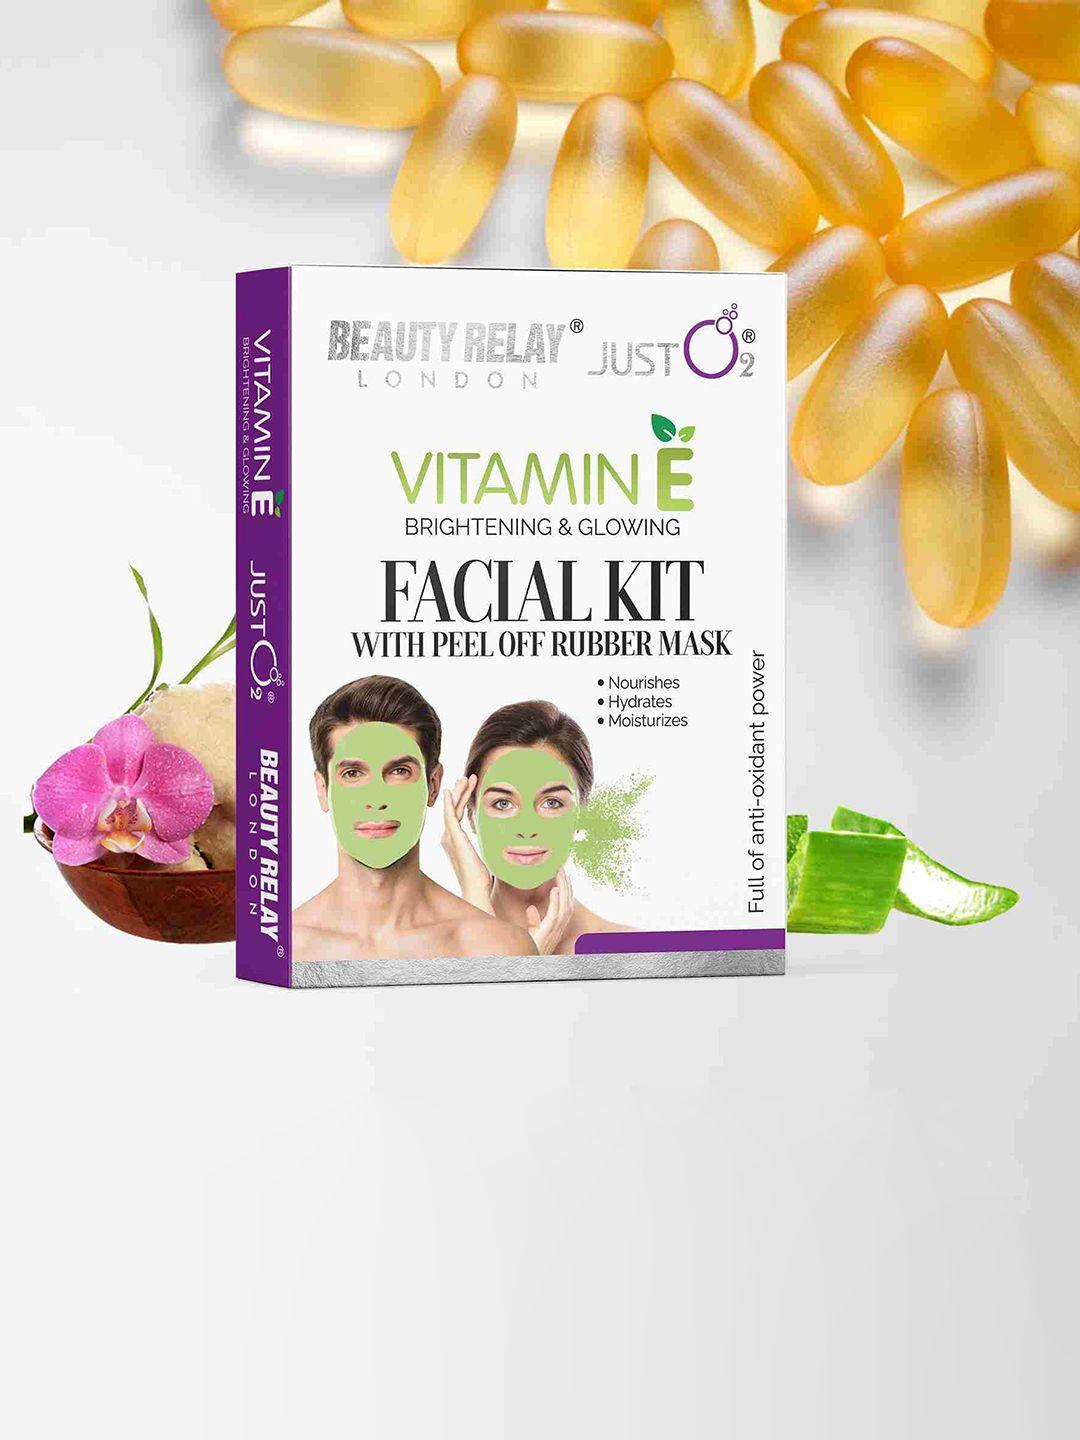 beautyrelay london vitamin e facial kit with peel of rubber mask 59g